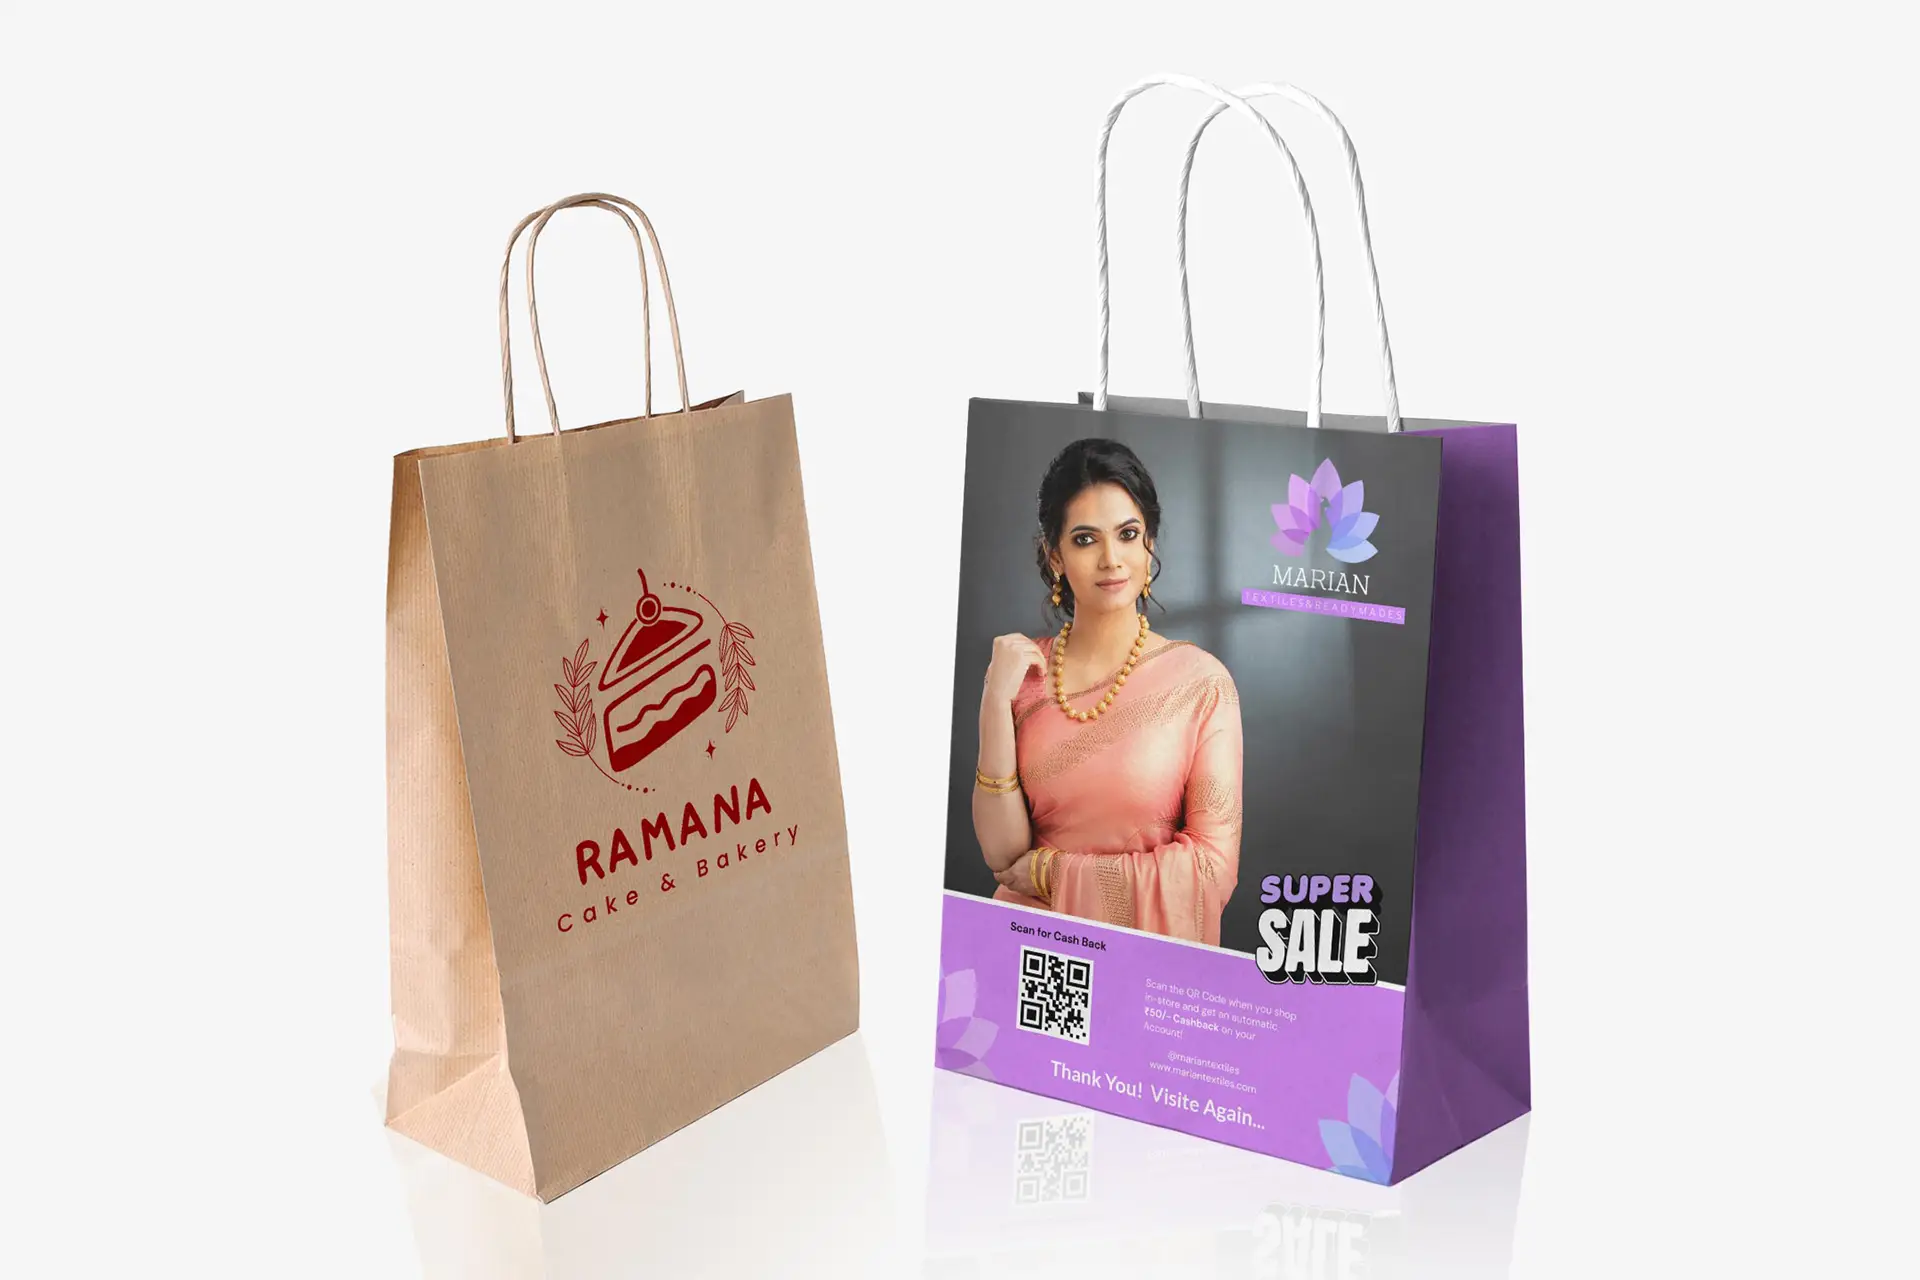 Retail Paper Bags